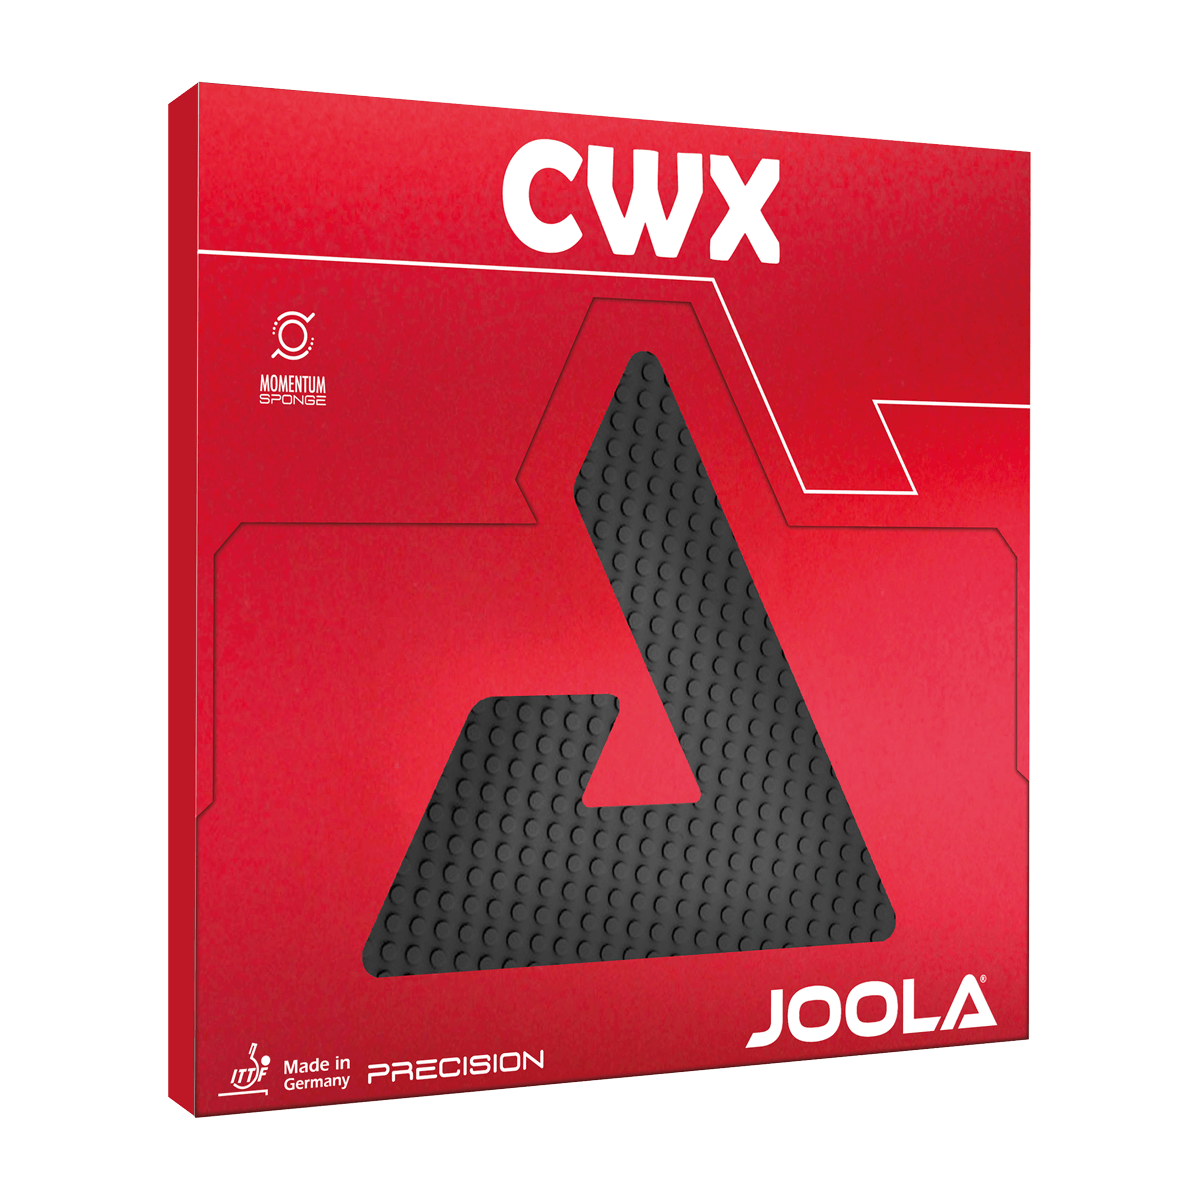 JOOLA CWX Long-Pips Table Tennis Rubber